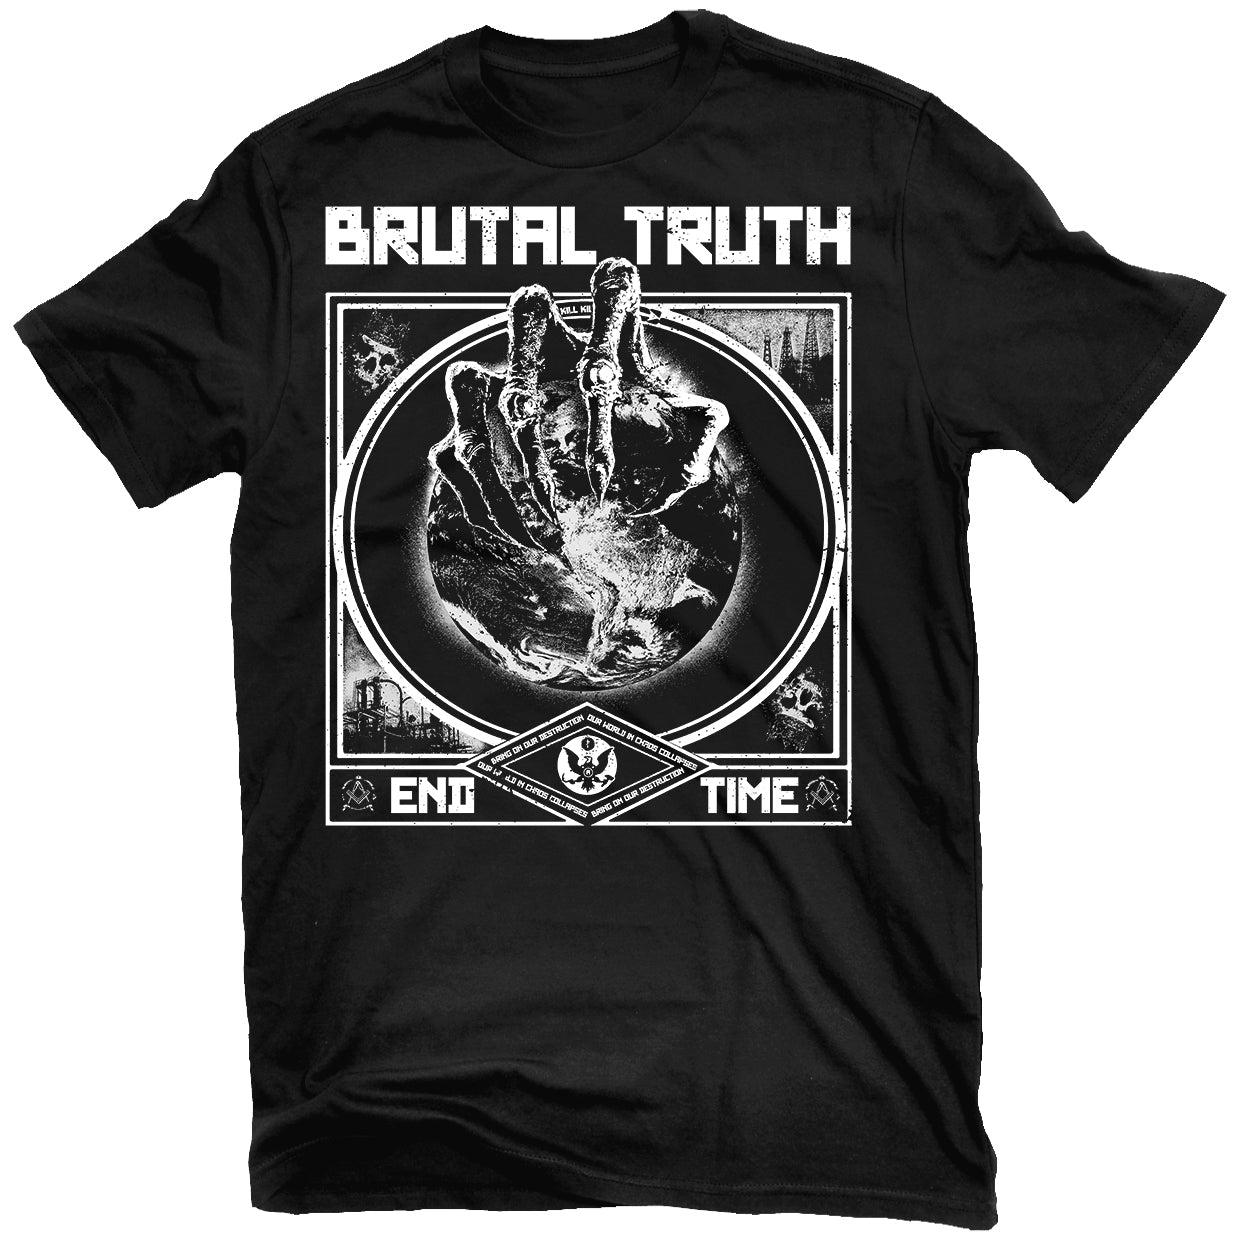 Brutal Truth "End Time" T-Shirt